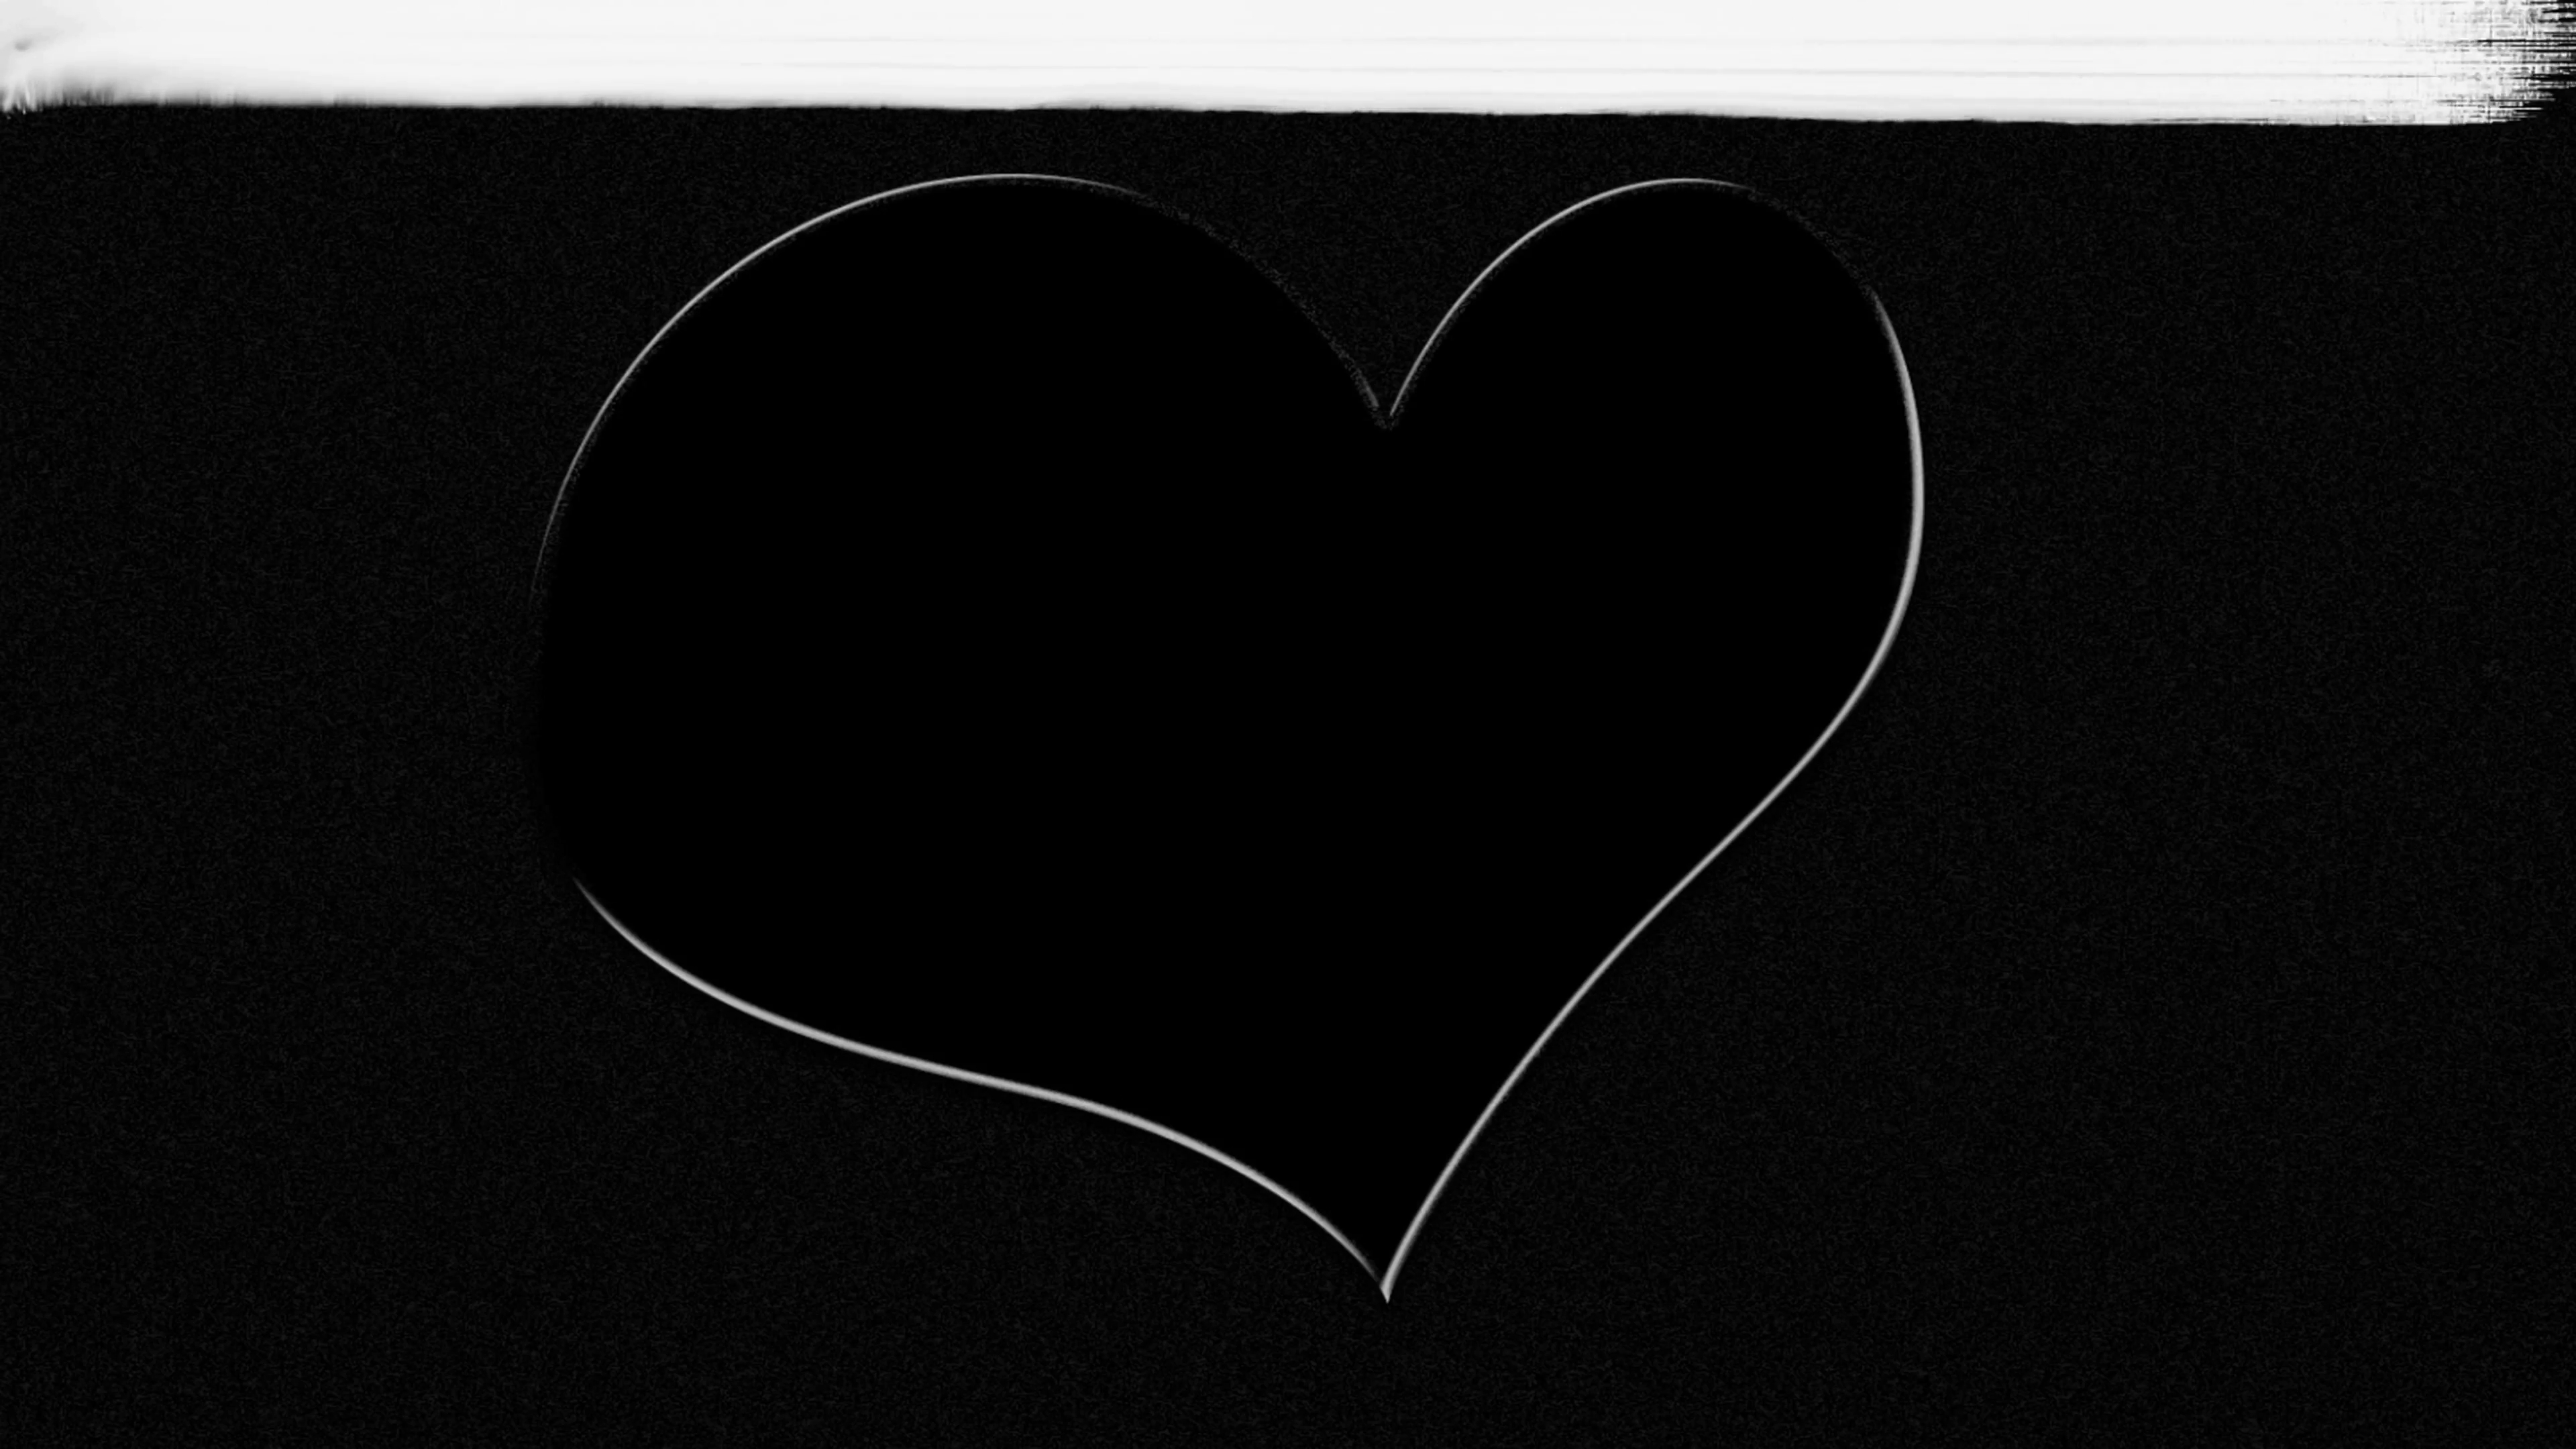 10 New White Heart Black Background FULL HD 1080p For PC Background